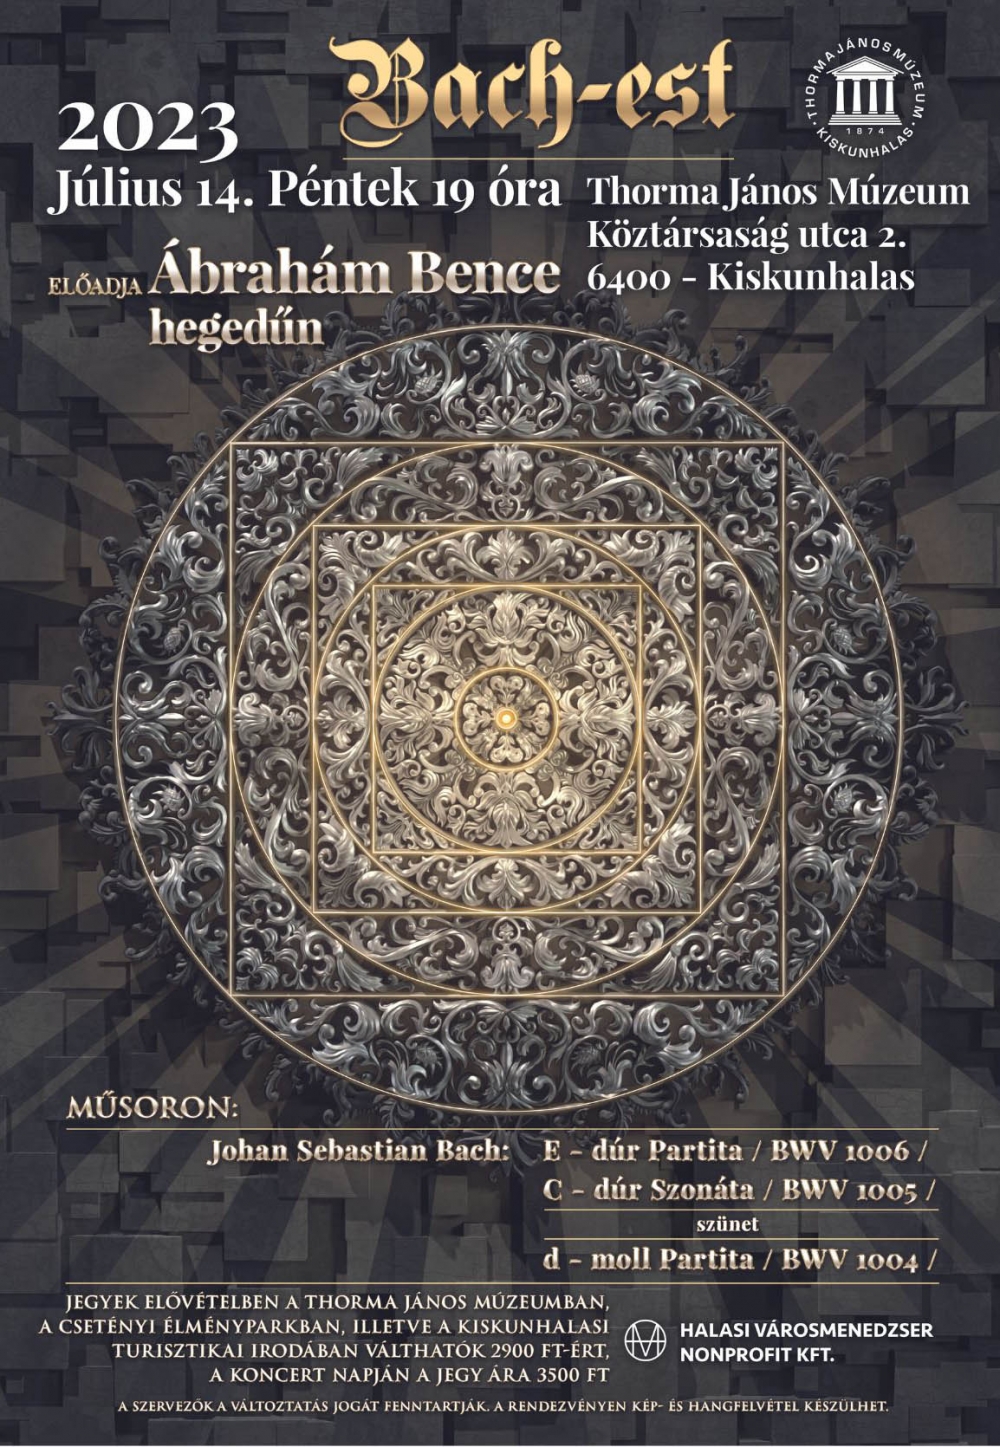 Ábrahám Bence hegedű koncert